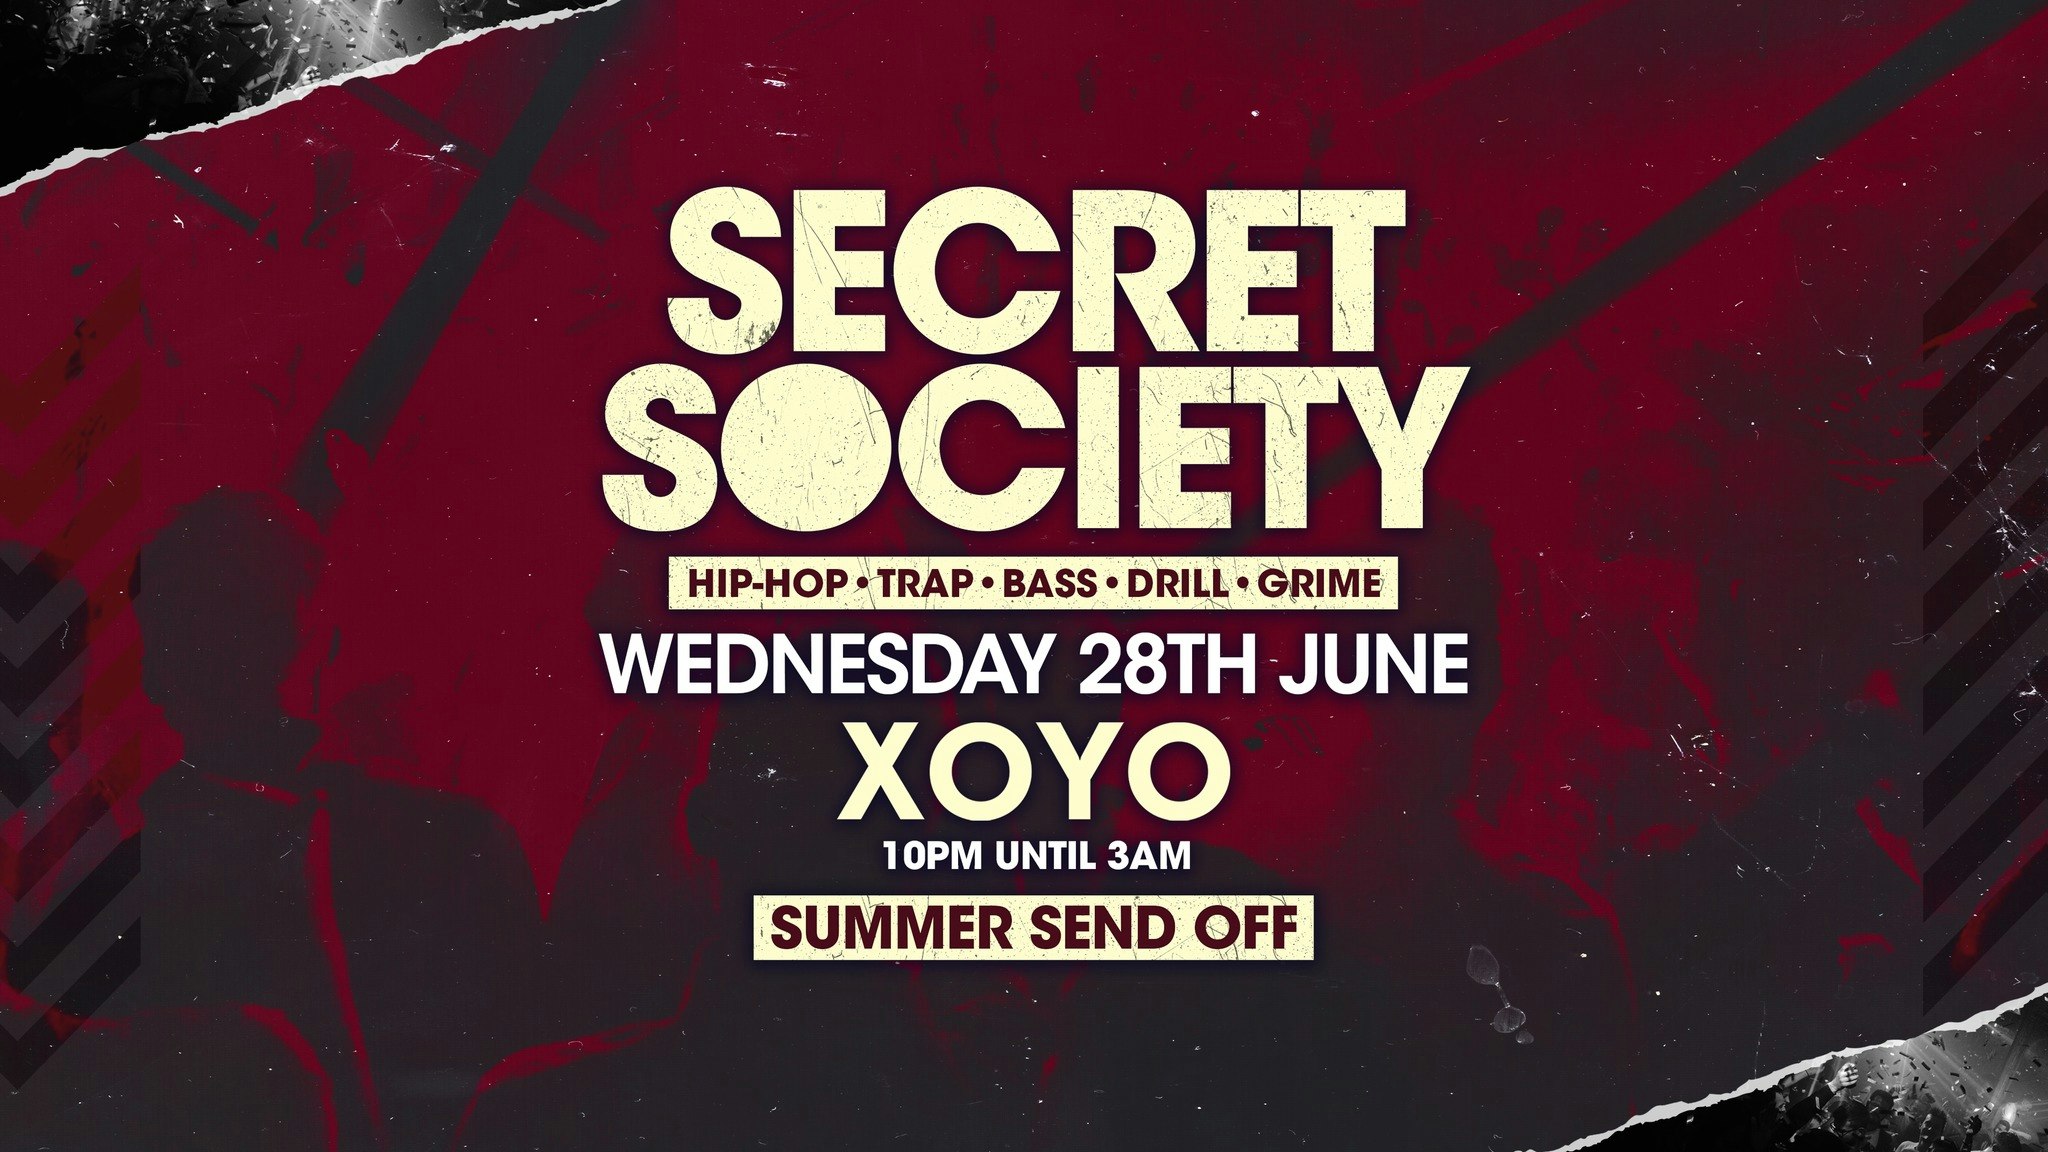 The Secret Society – Hiphop / Trap / Bass at XOYO!